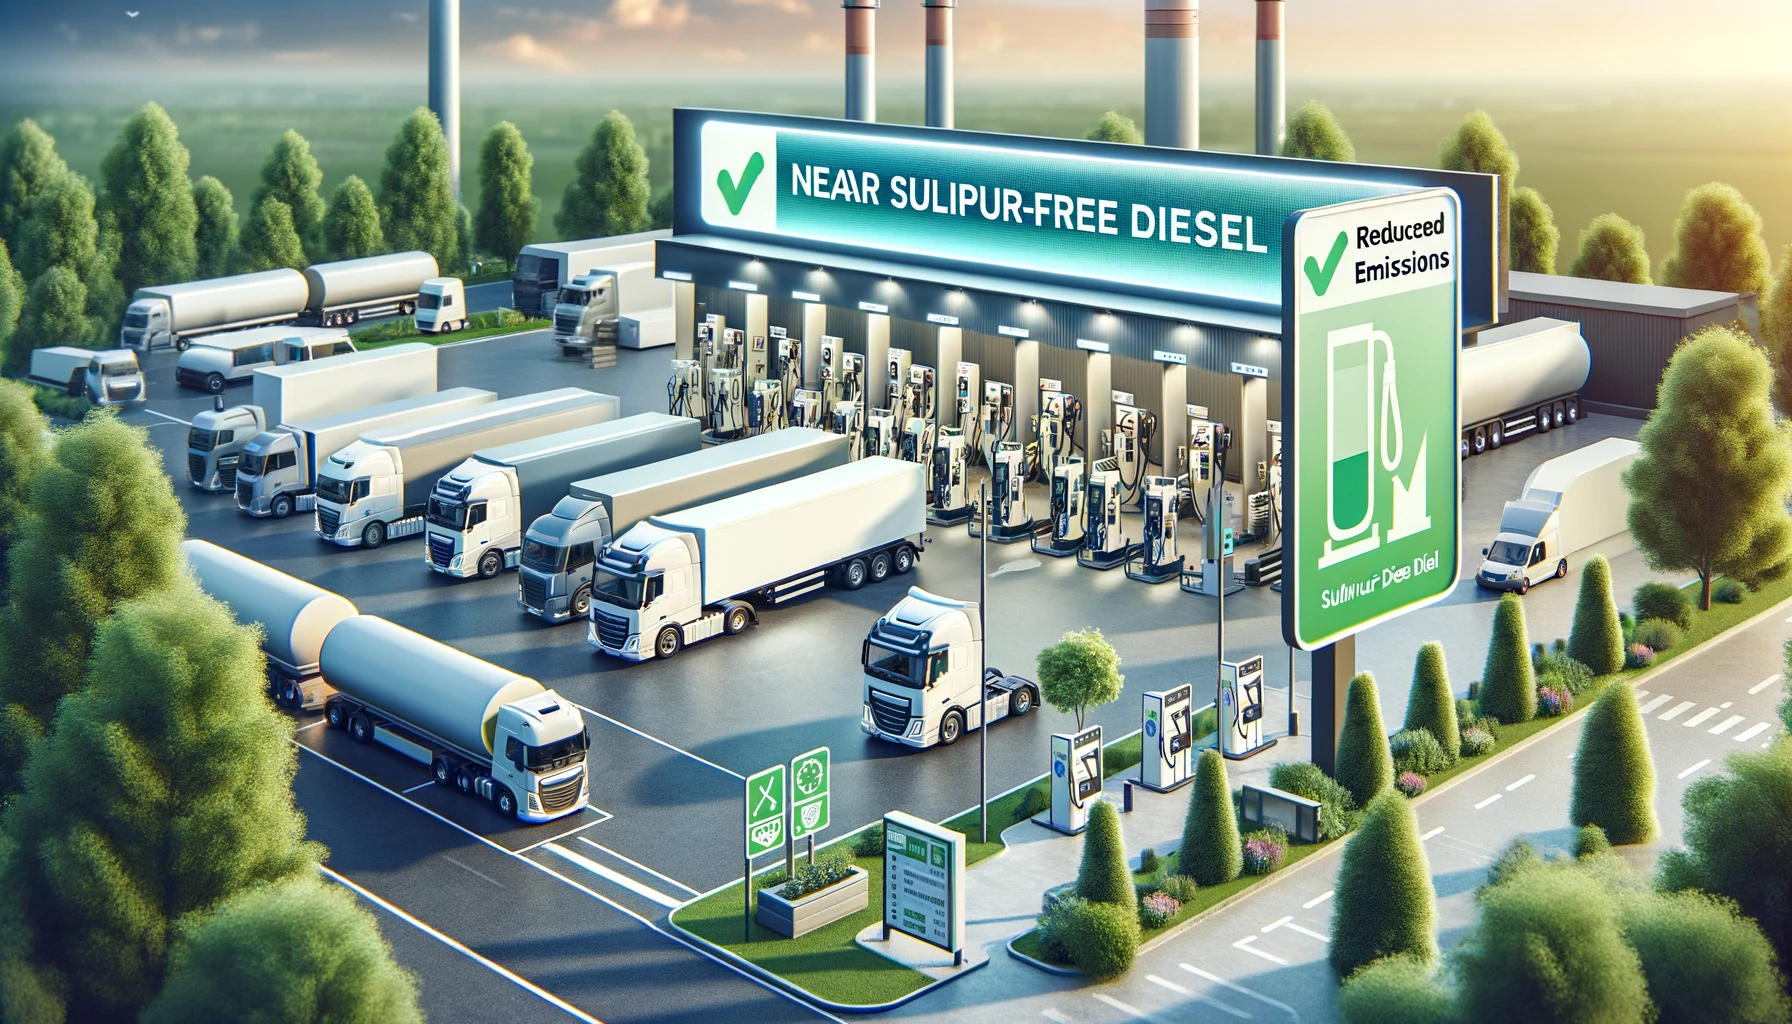 Showcasing-the-benefits-of-using-near-sulphur-free-diesel